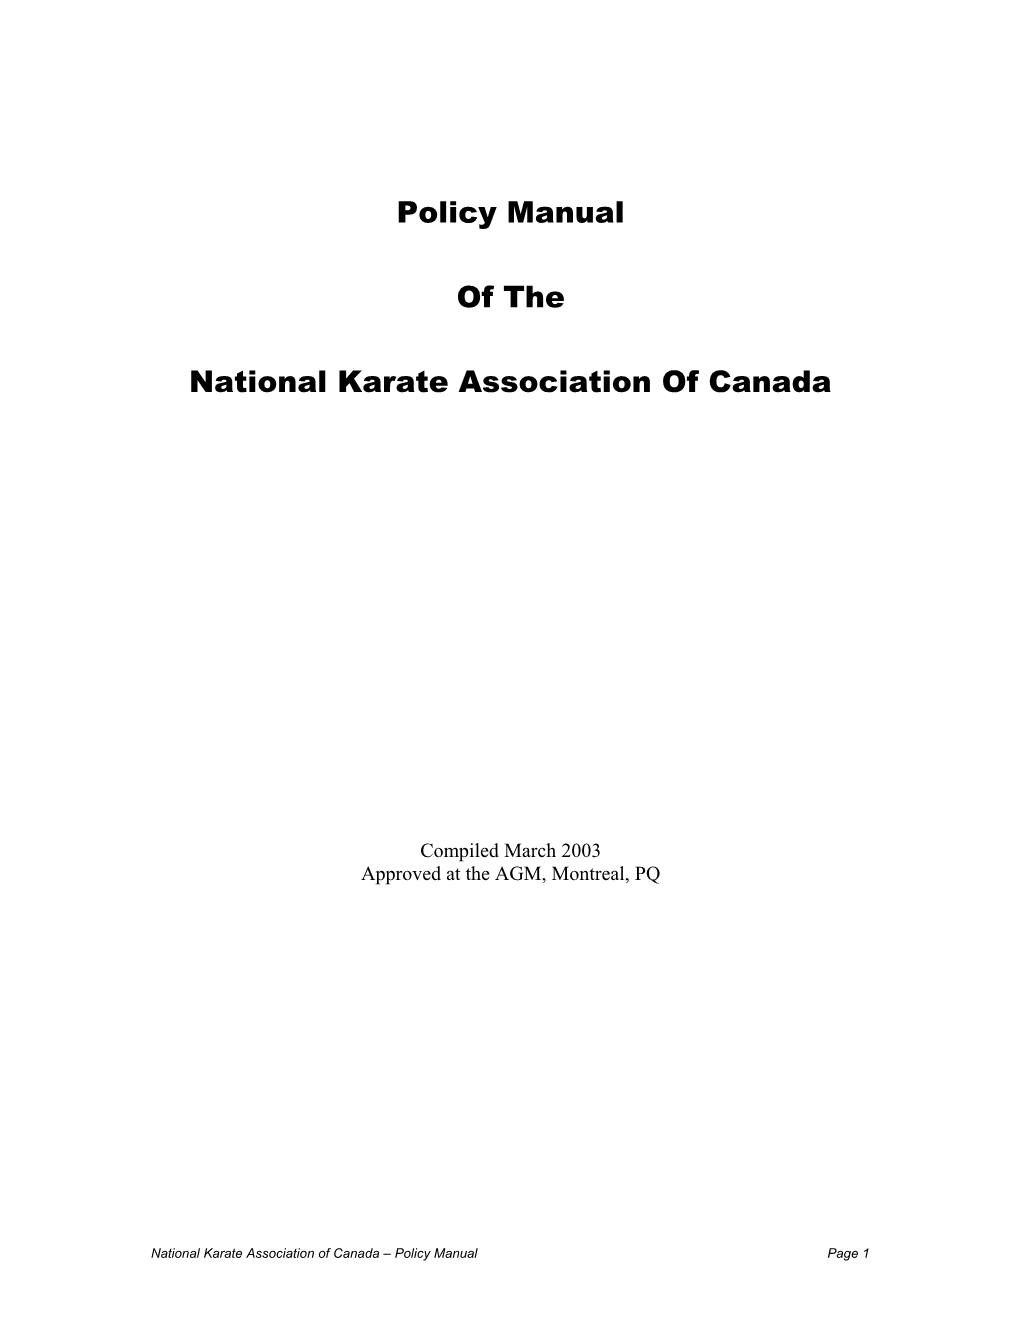 National Karate Association of Canada